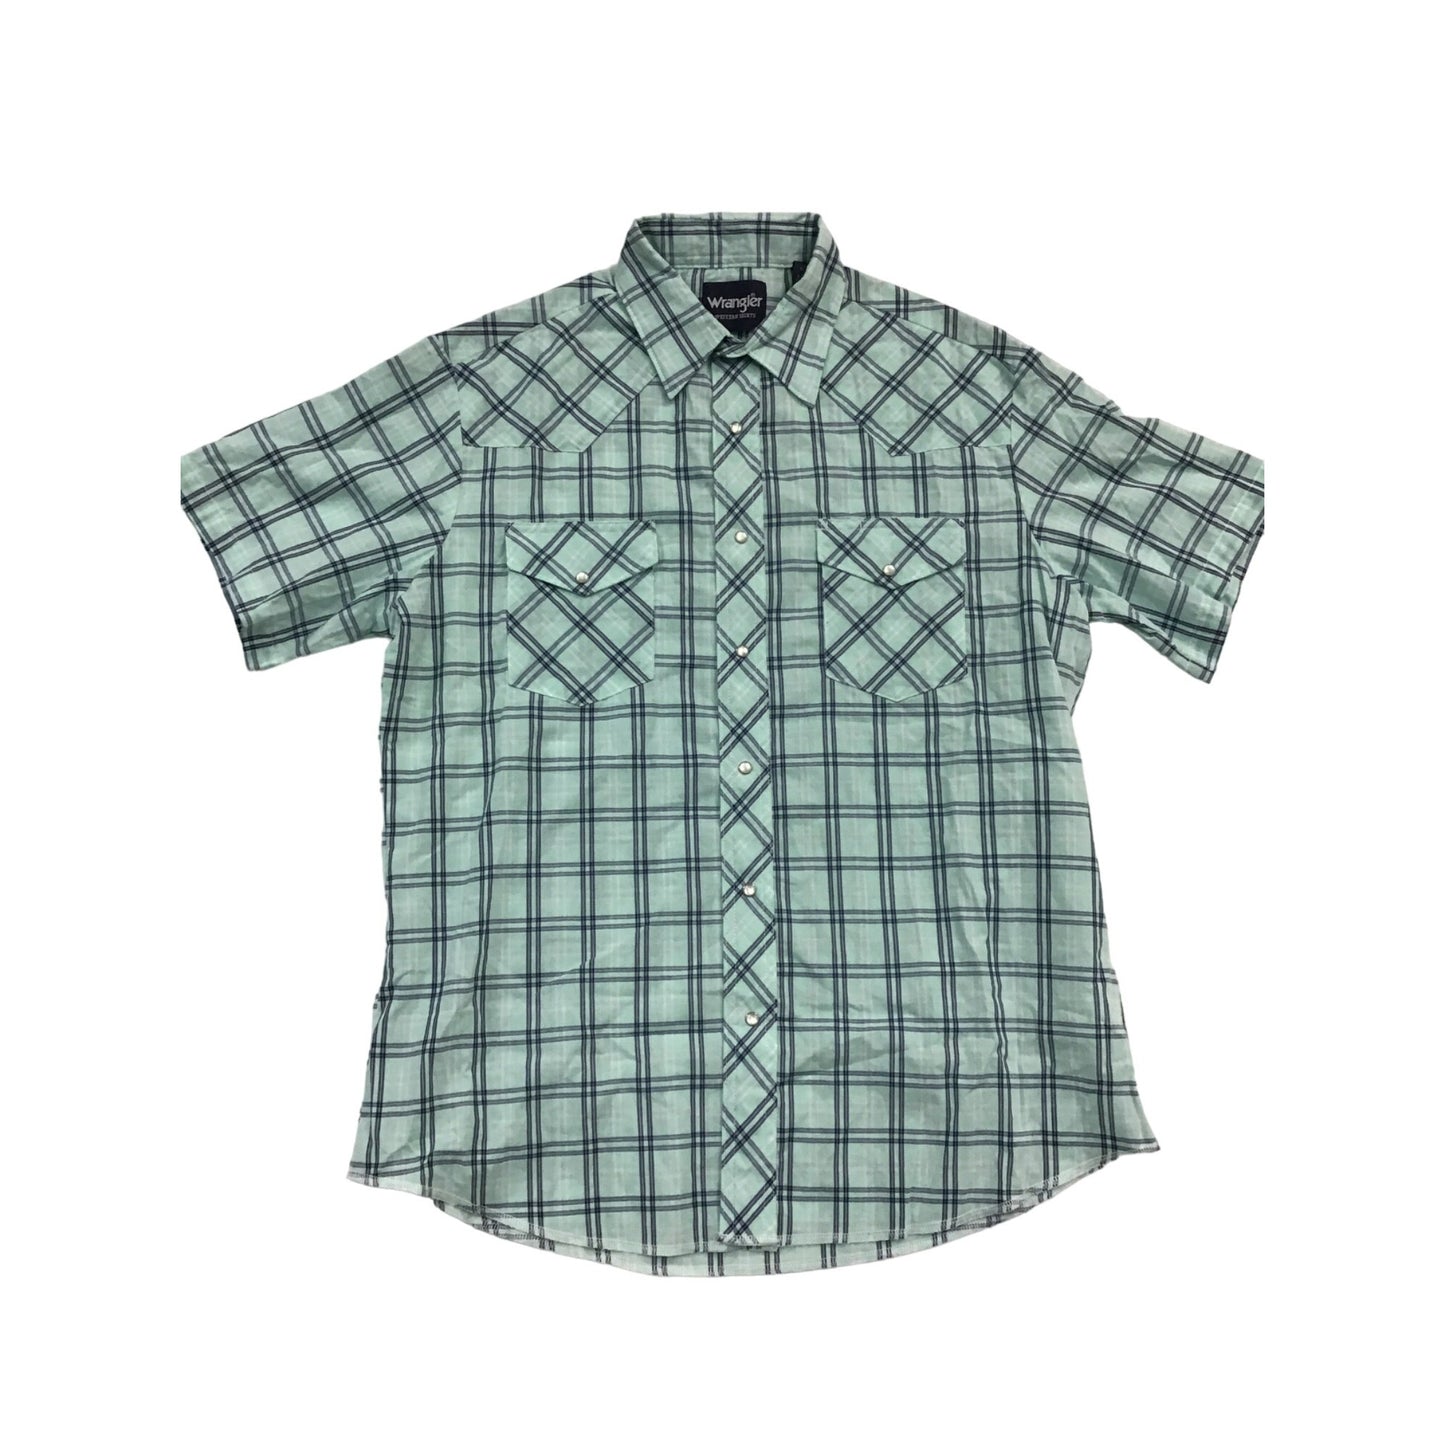 Men’s Western Styled Short Sleeve Snap-Shirt